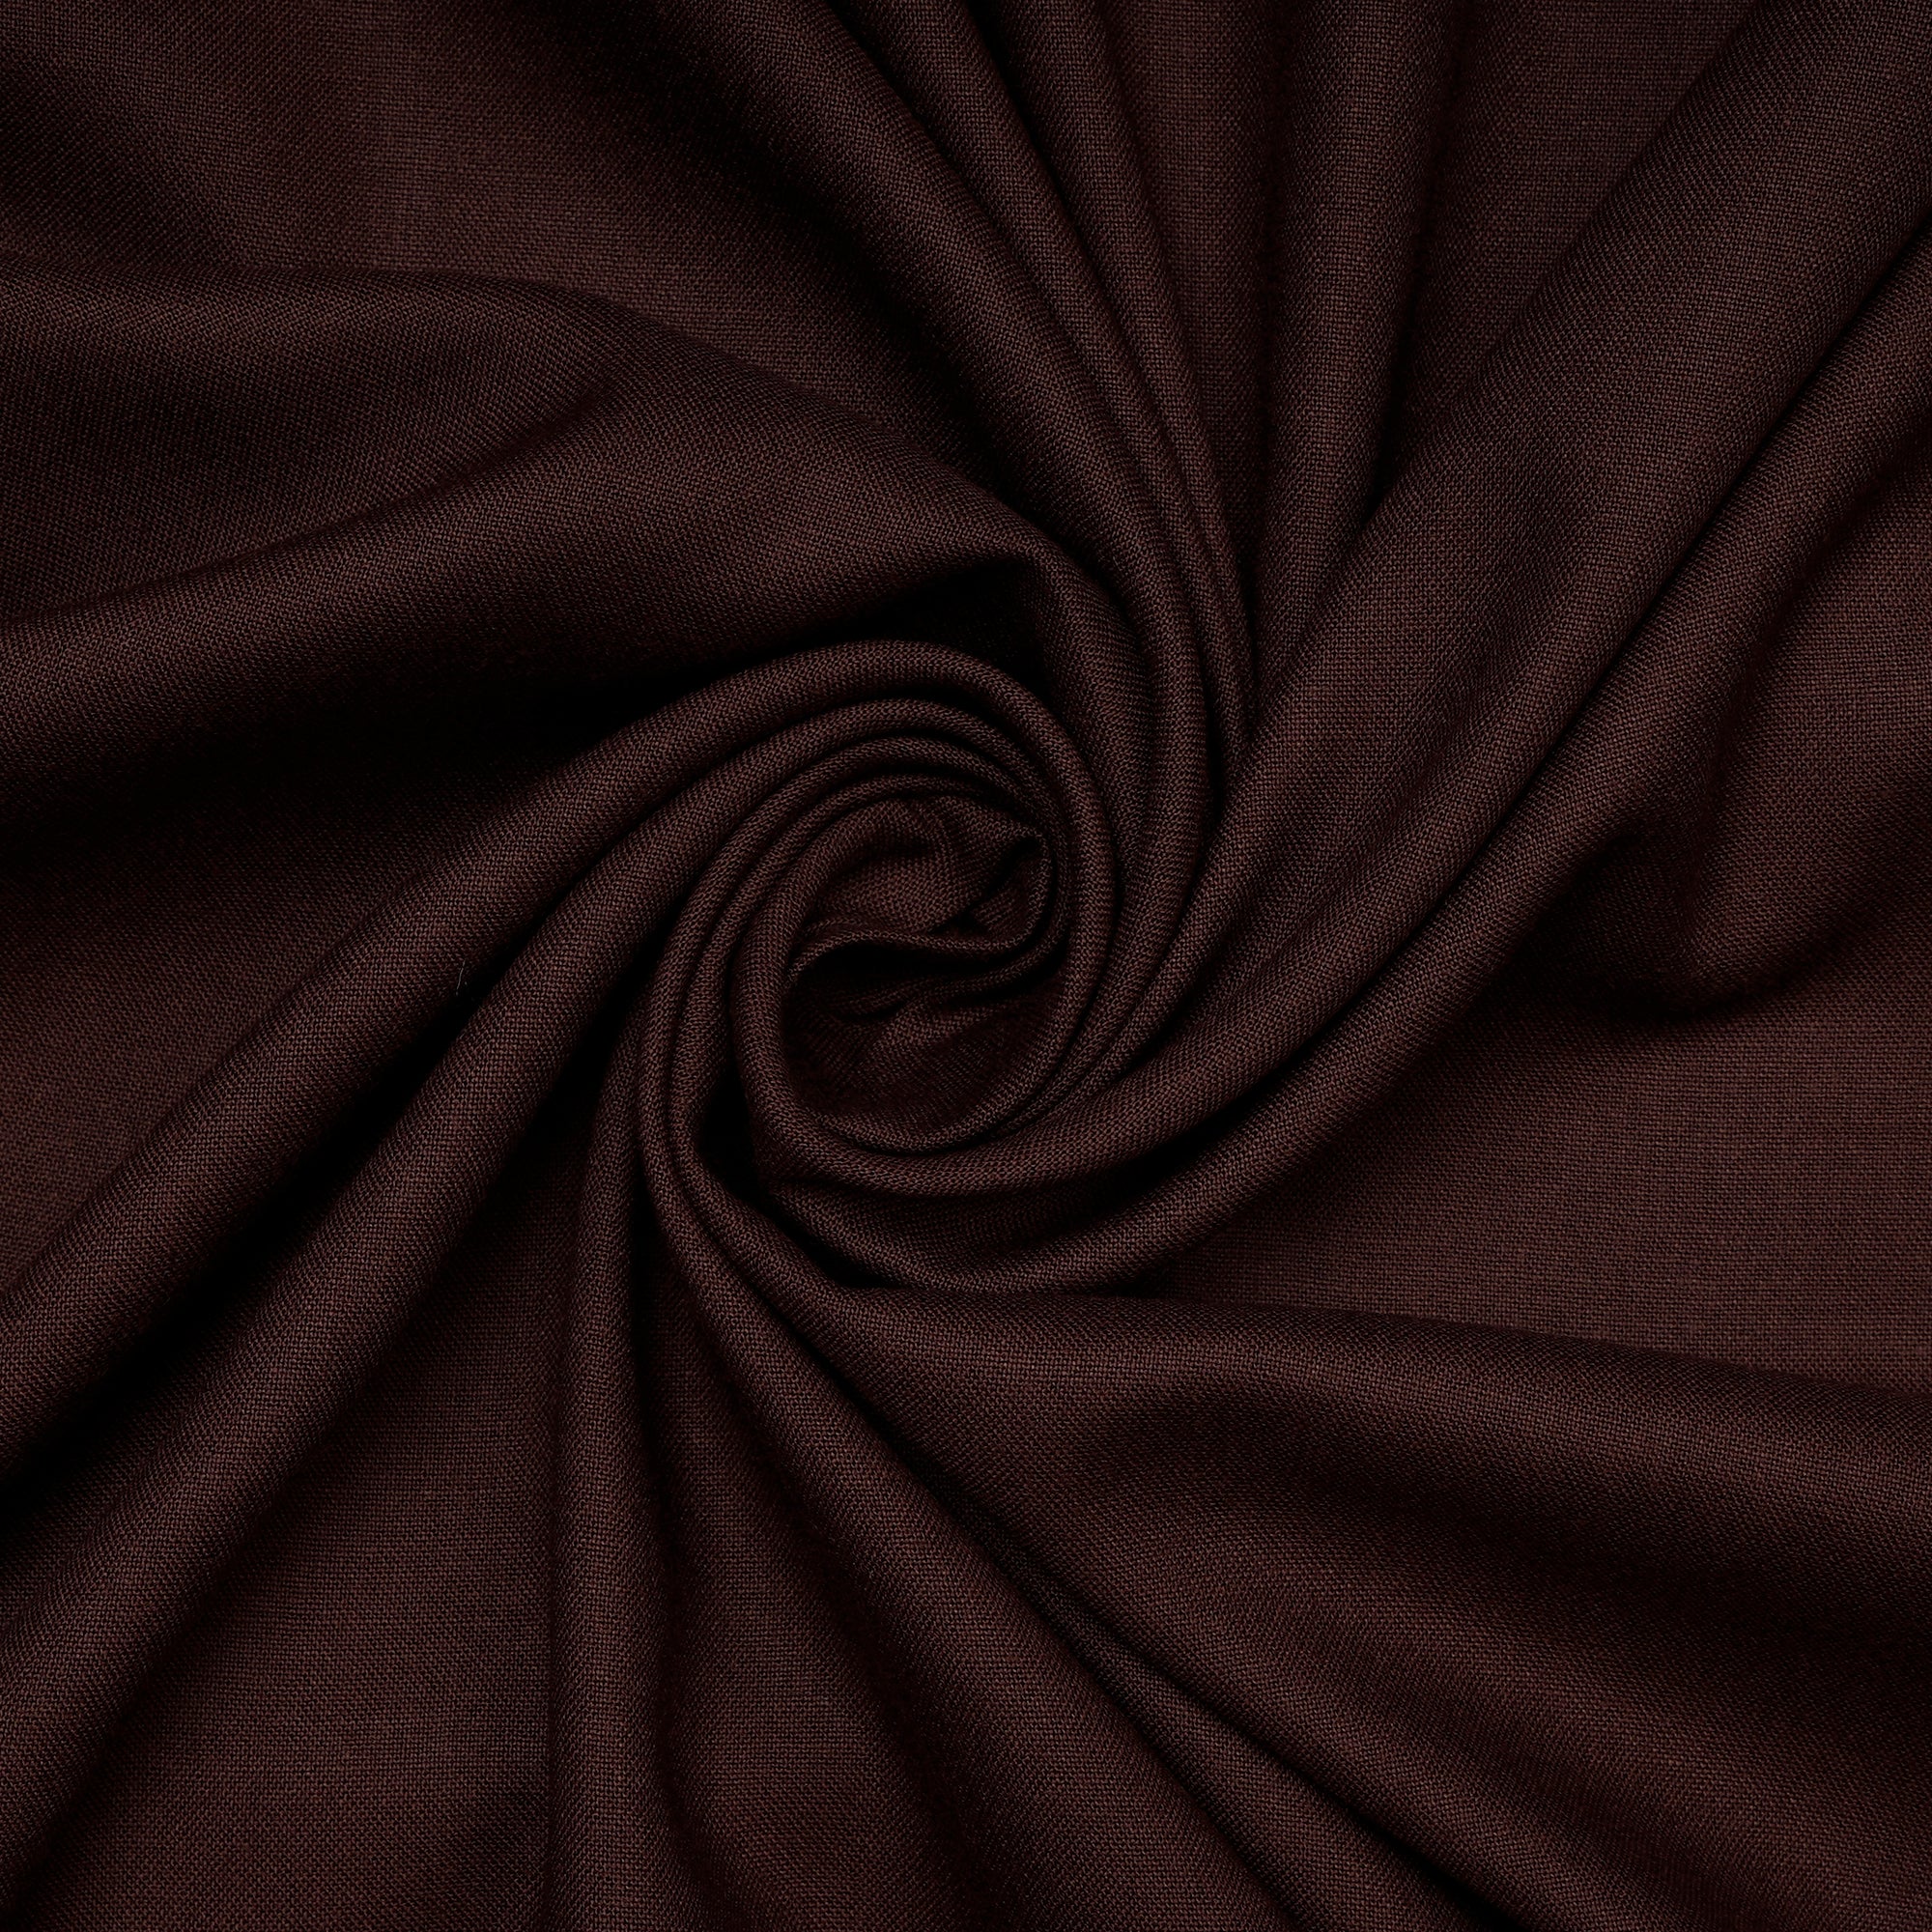 Deep Chocolate Brown Mill Dyed Rayon Fabric